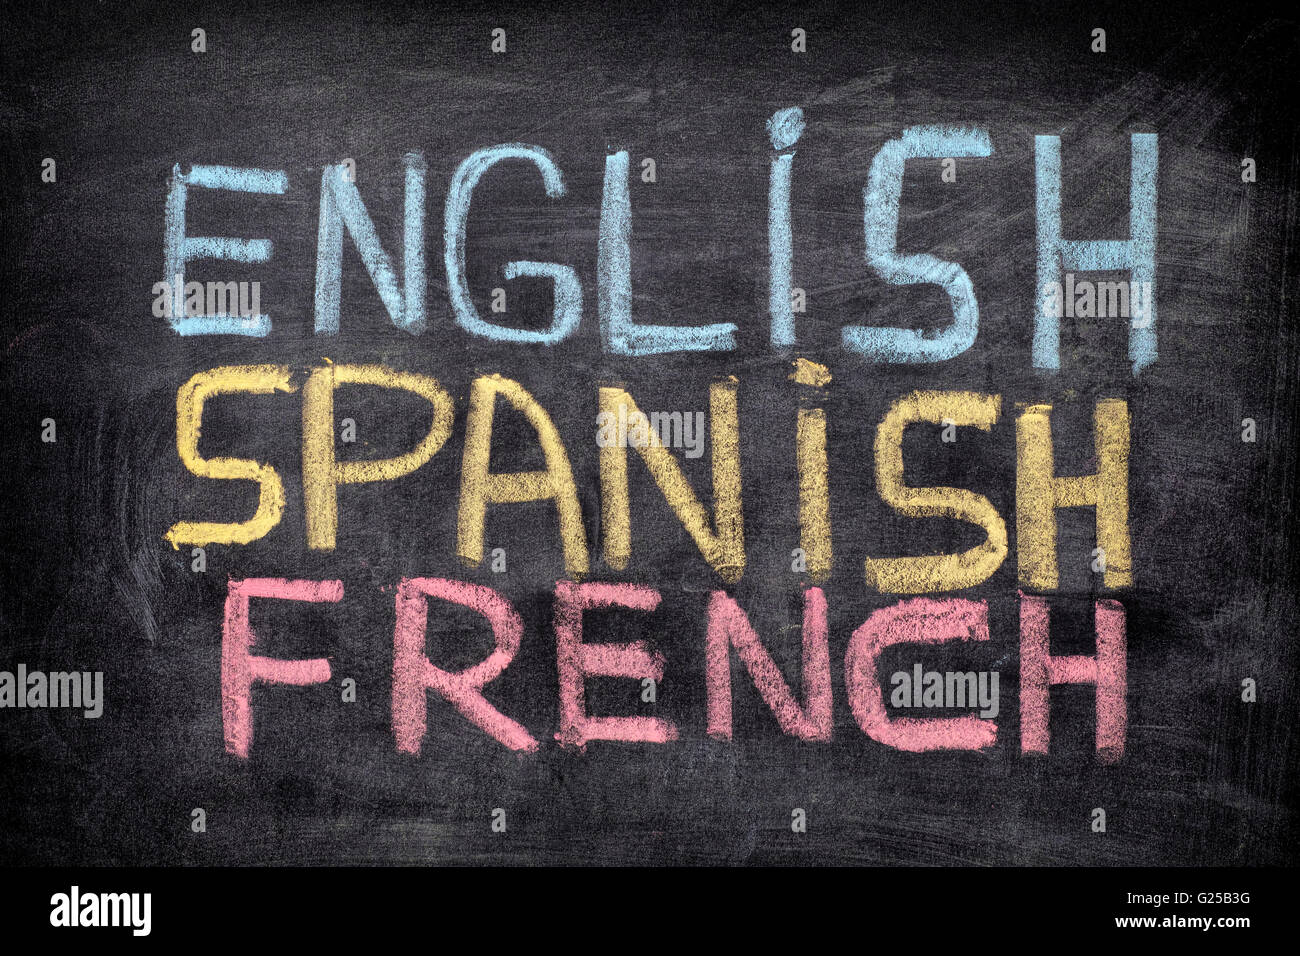 Choose your language. Words English, Spanish, French drawn on blackboard. Close up. Stock Photo